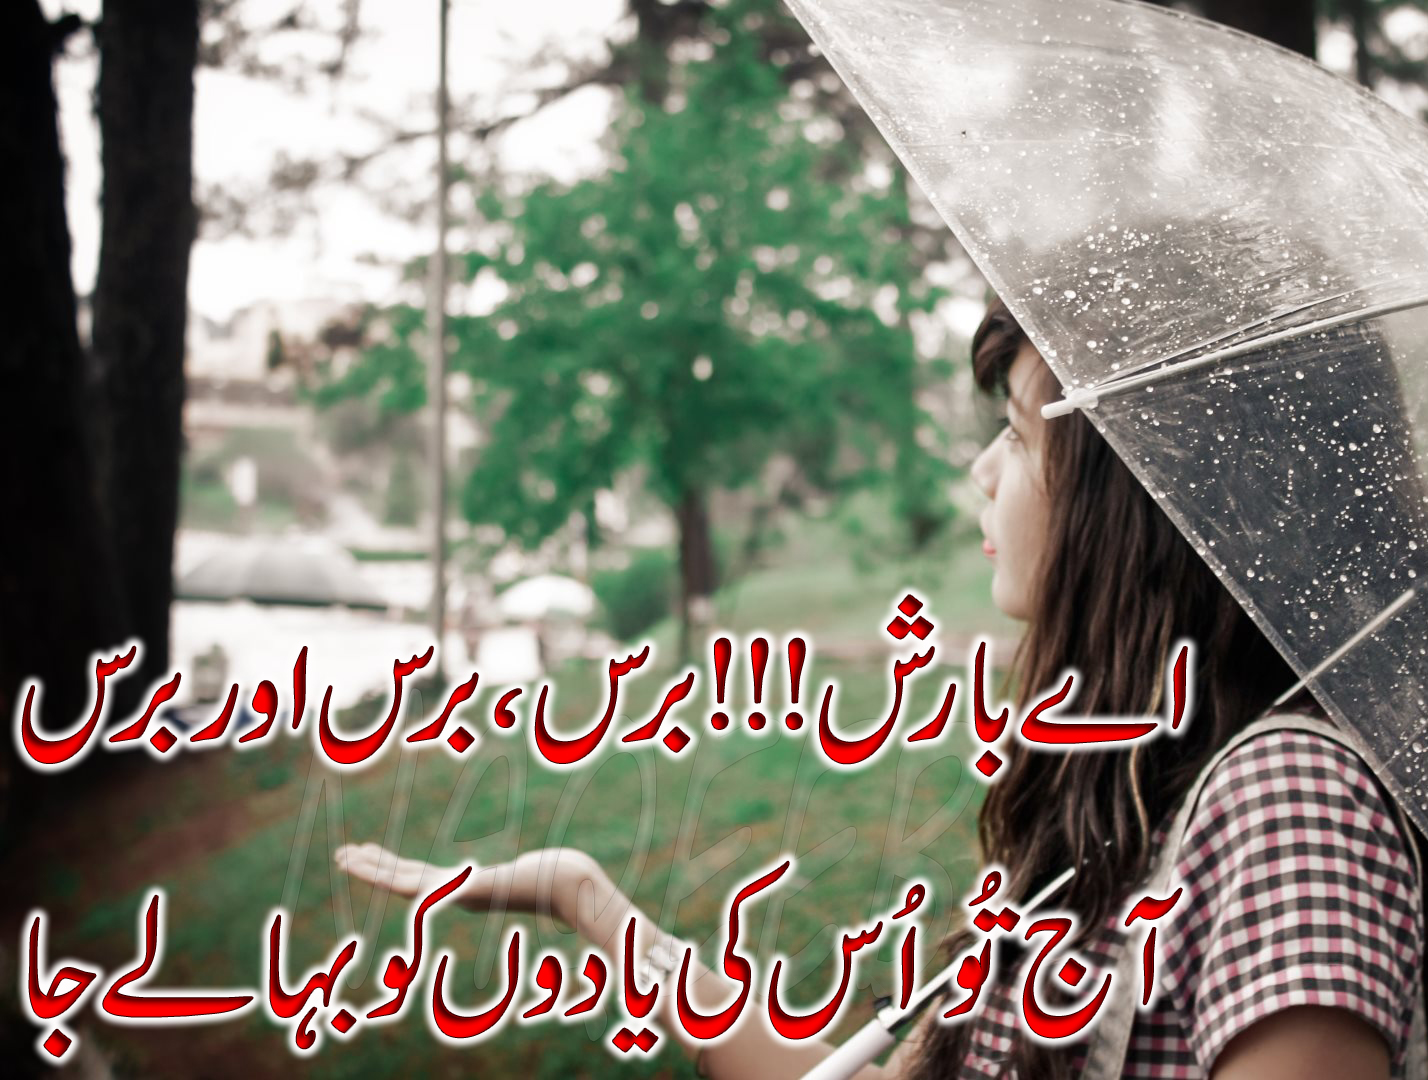 Barish qoyi. Status about Rain. Women Fashion Urdu Poetry. Sad Poetry.